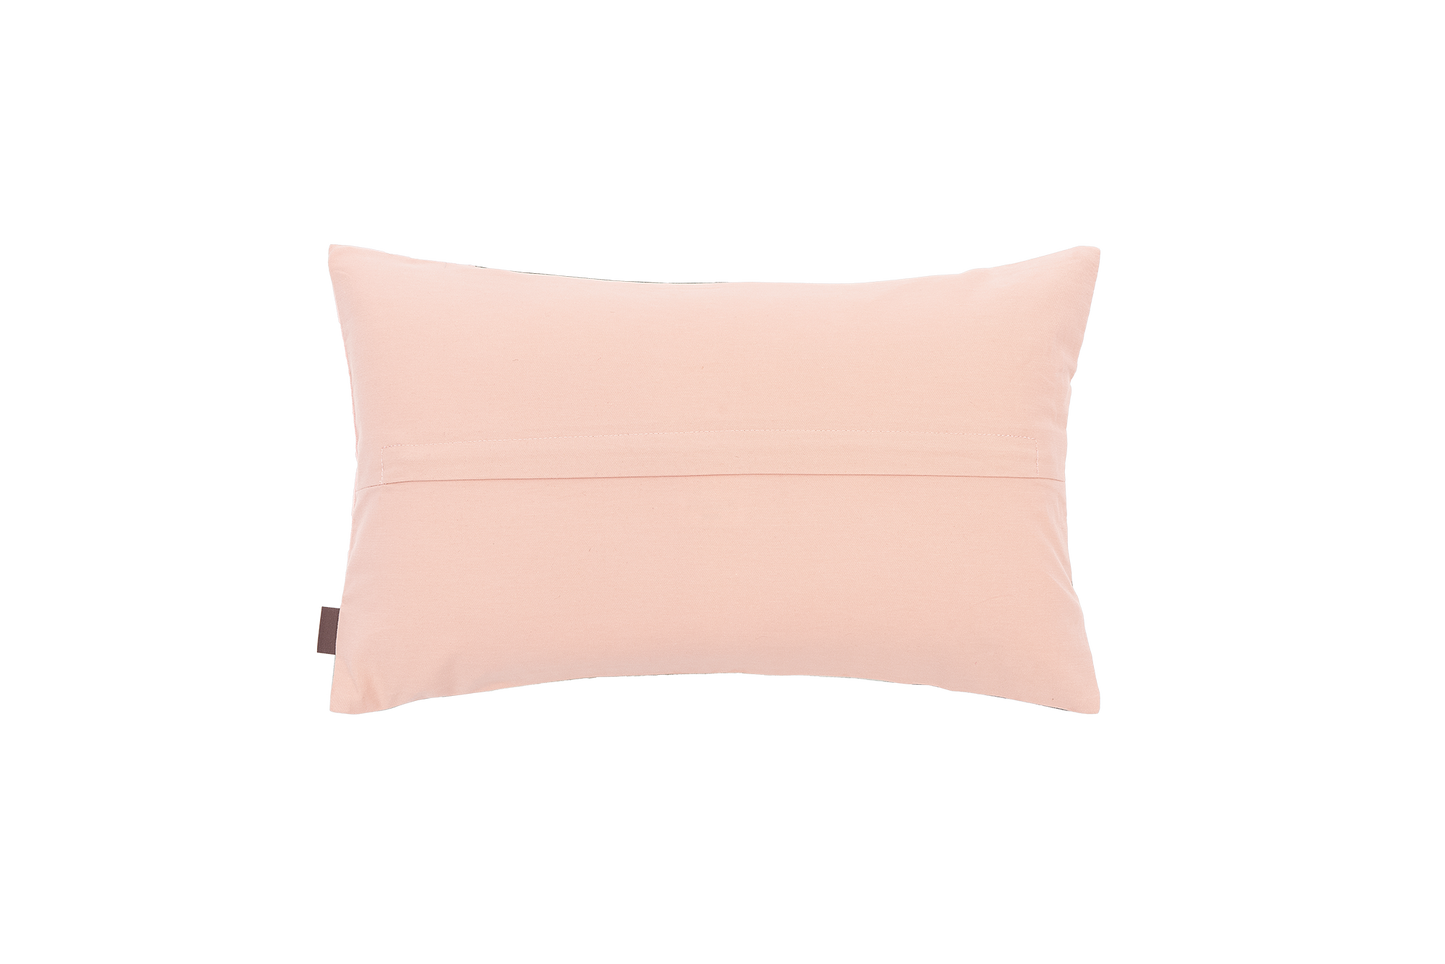 3D Flower Pattern Accent Pillow Lumbar Cushion Cover & Insert[LOCAL PICKUP]